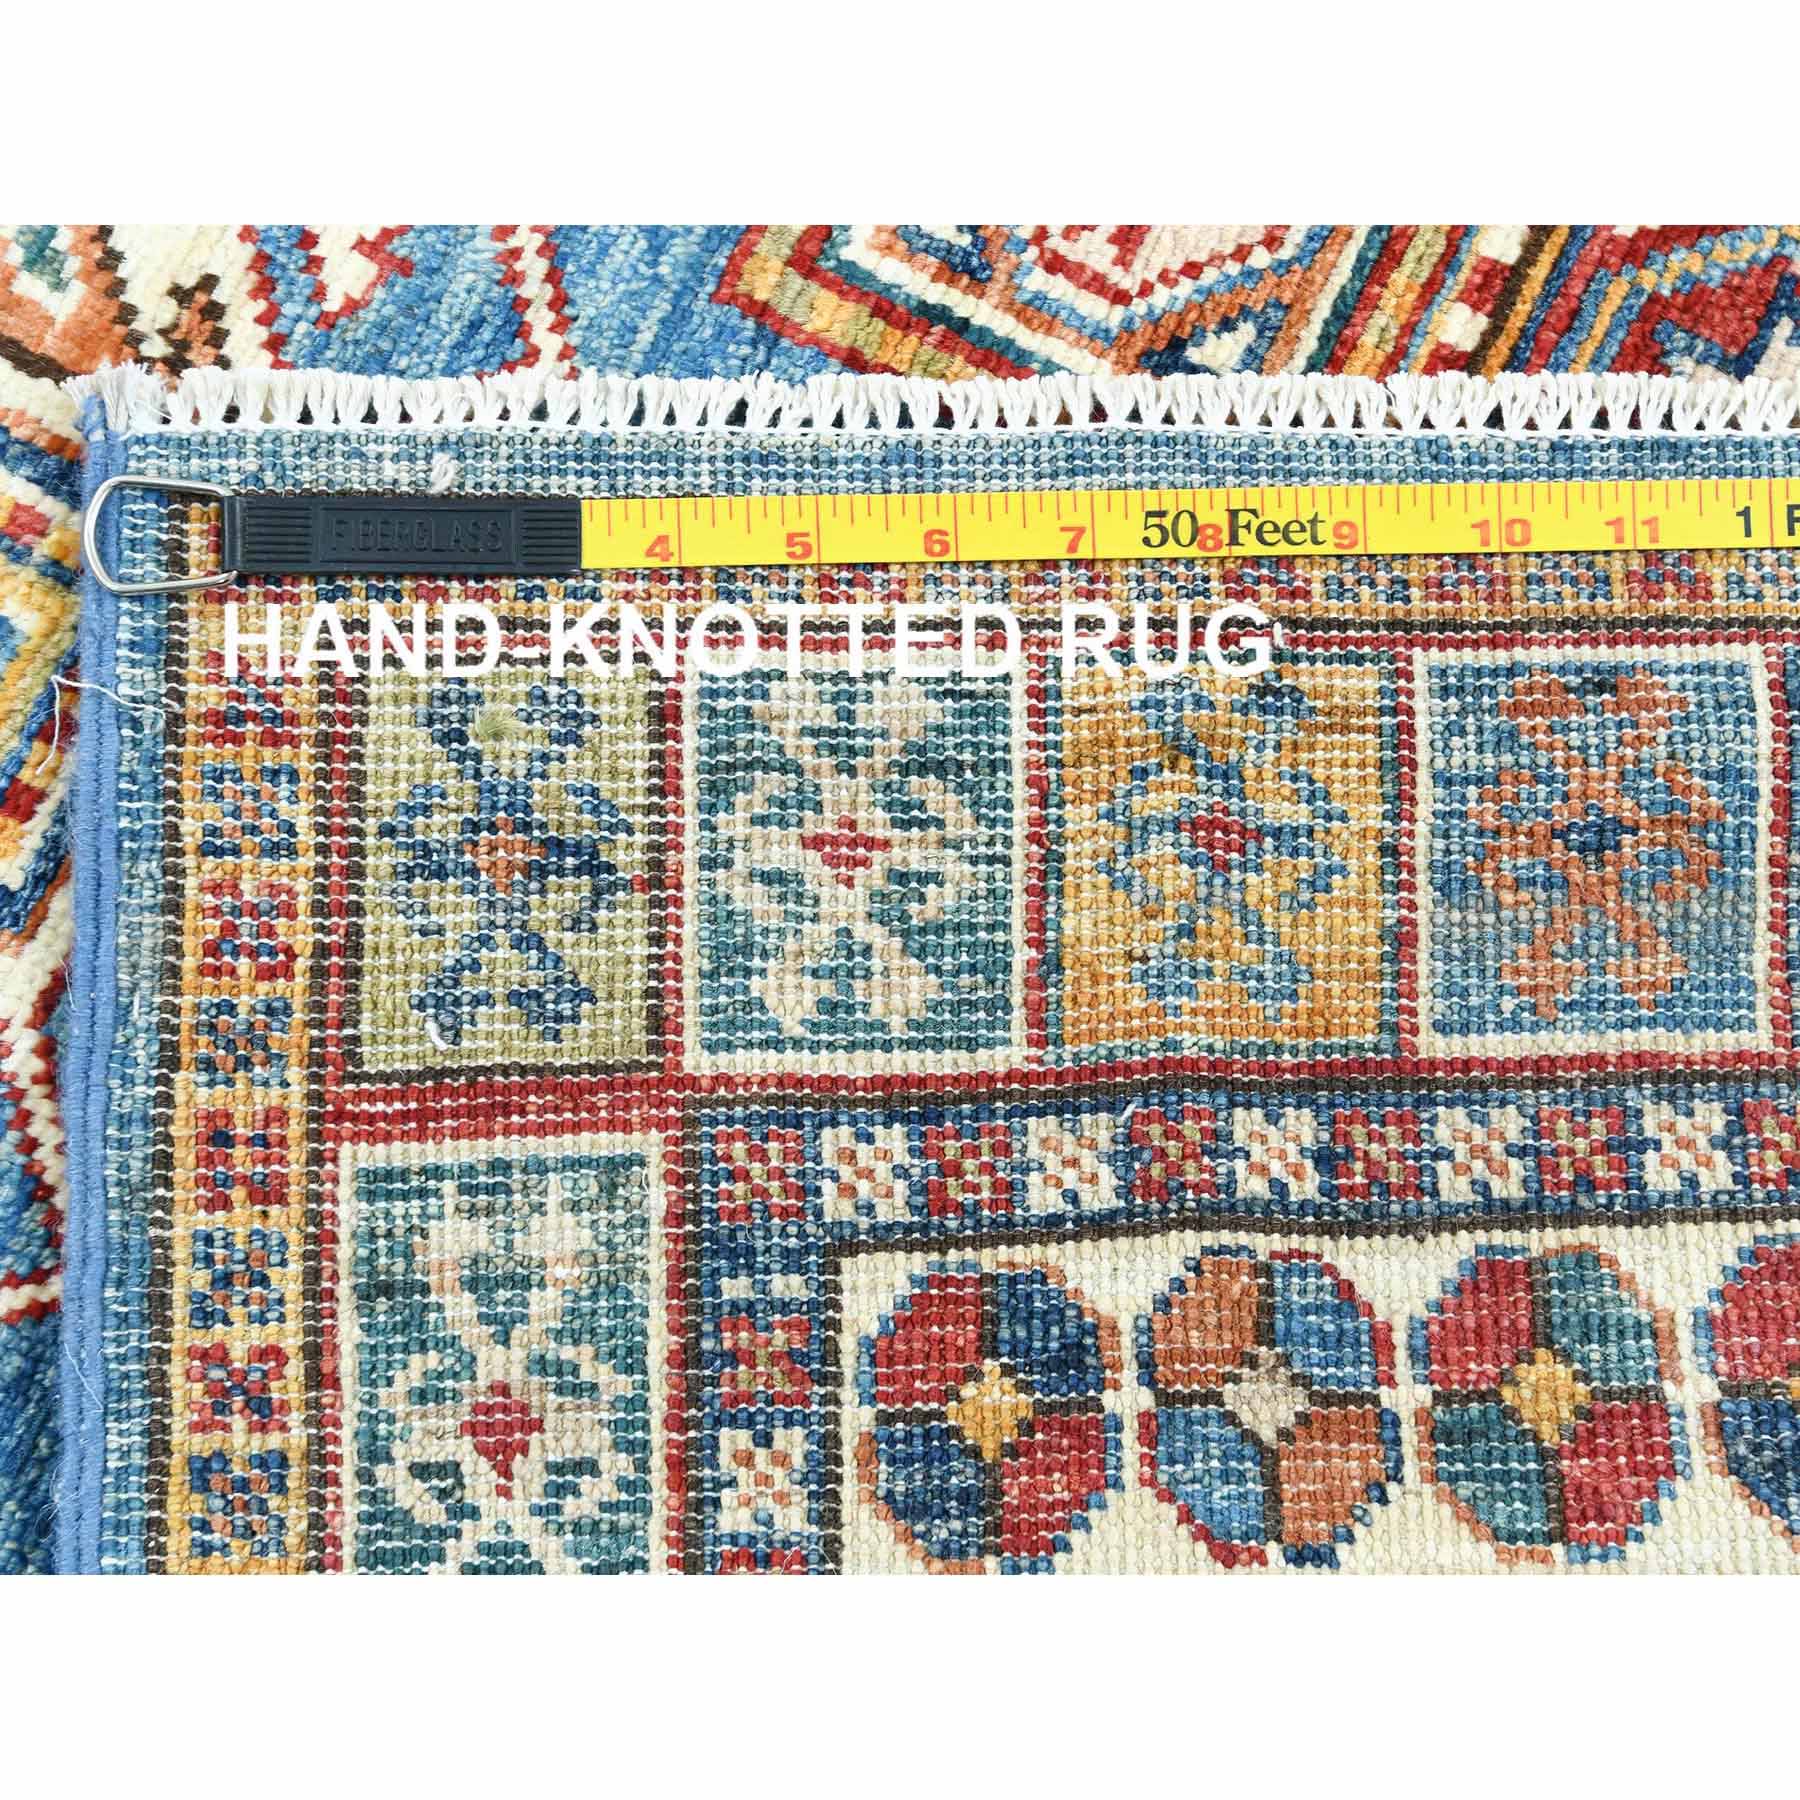 Kazak-Hand-Knotted-Rug-413030